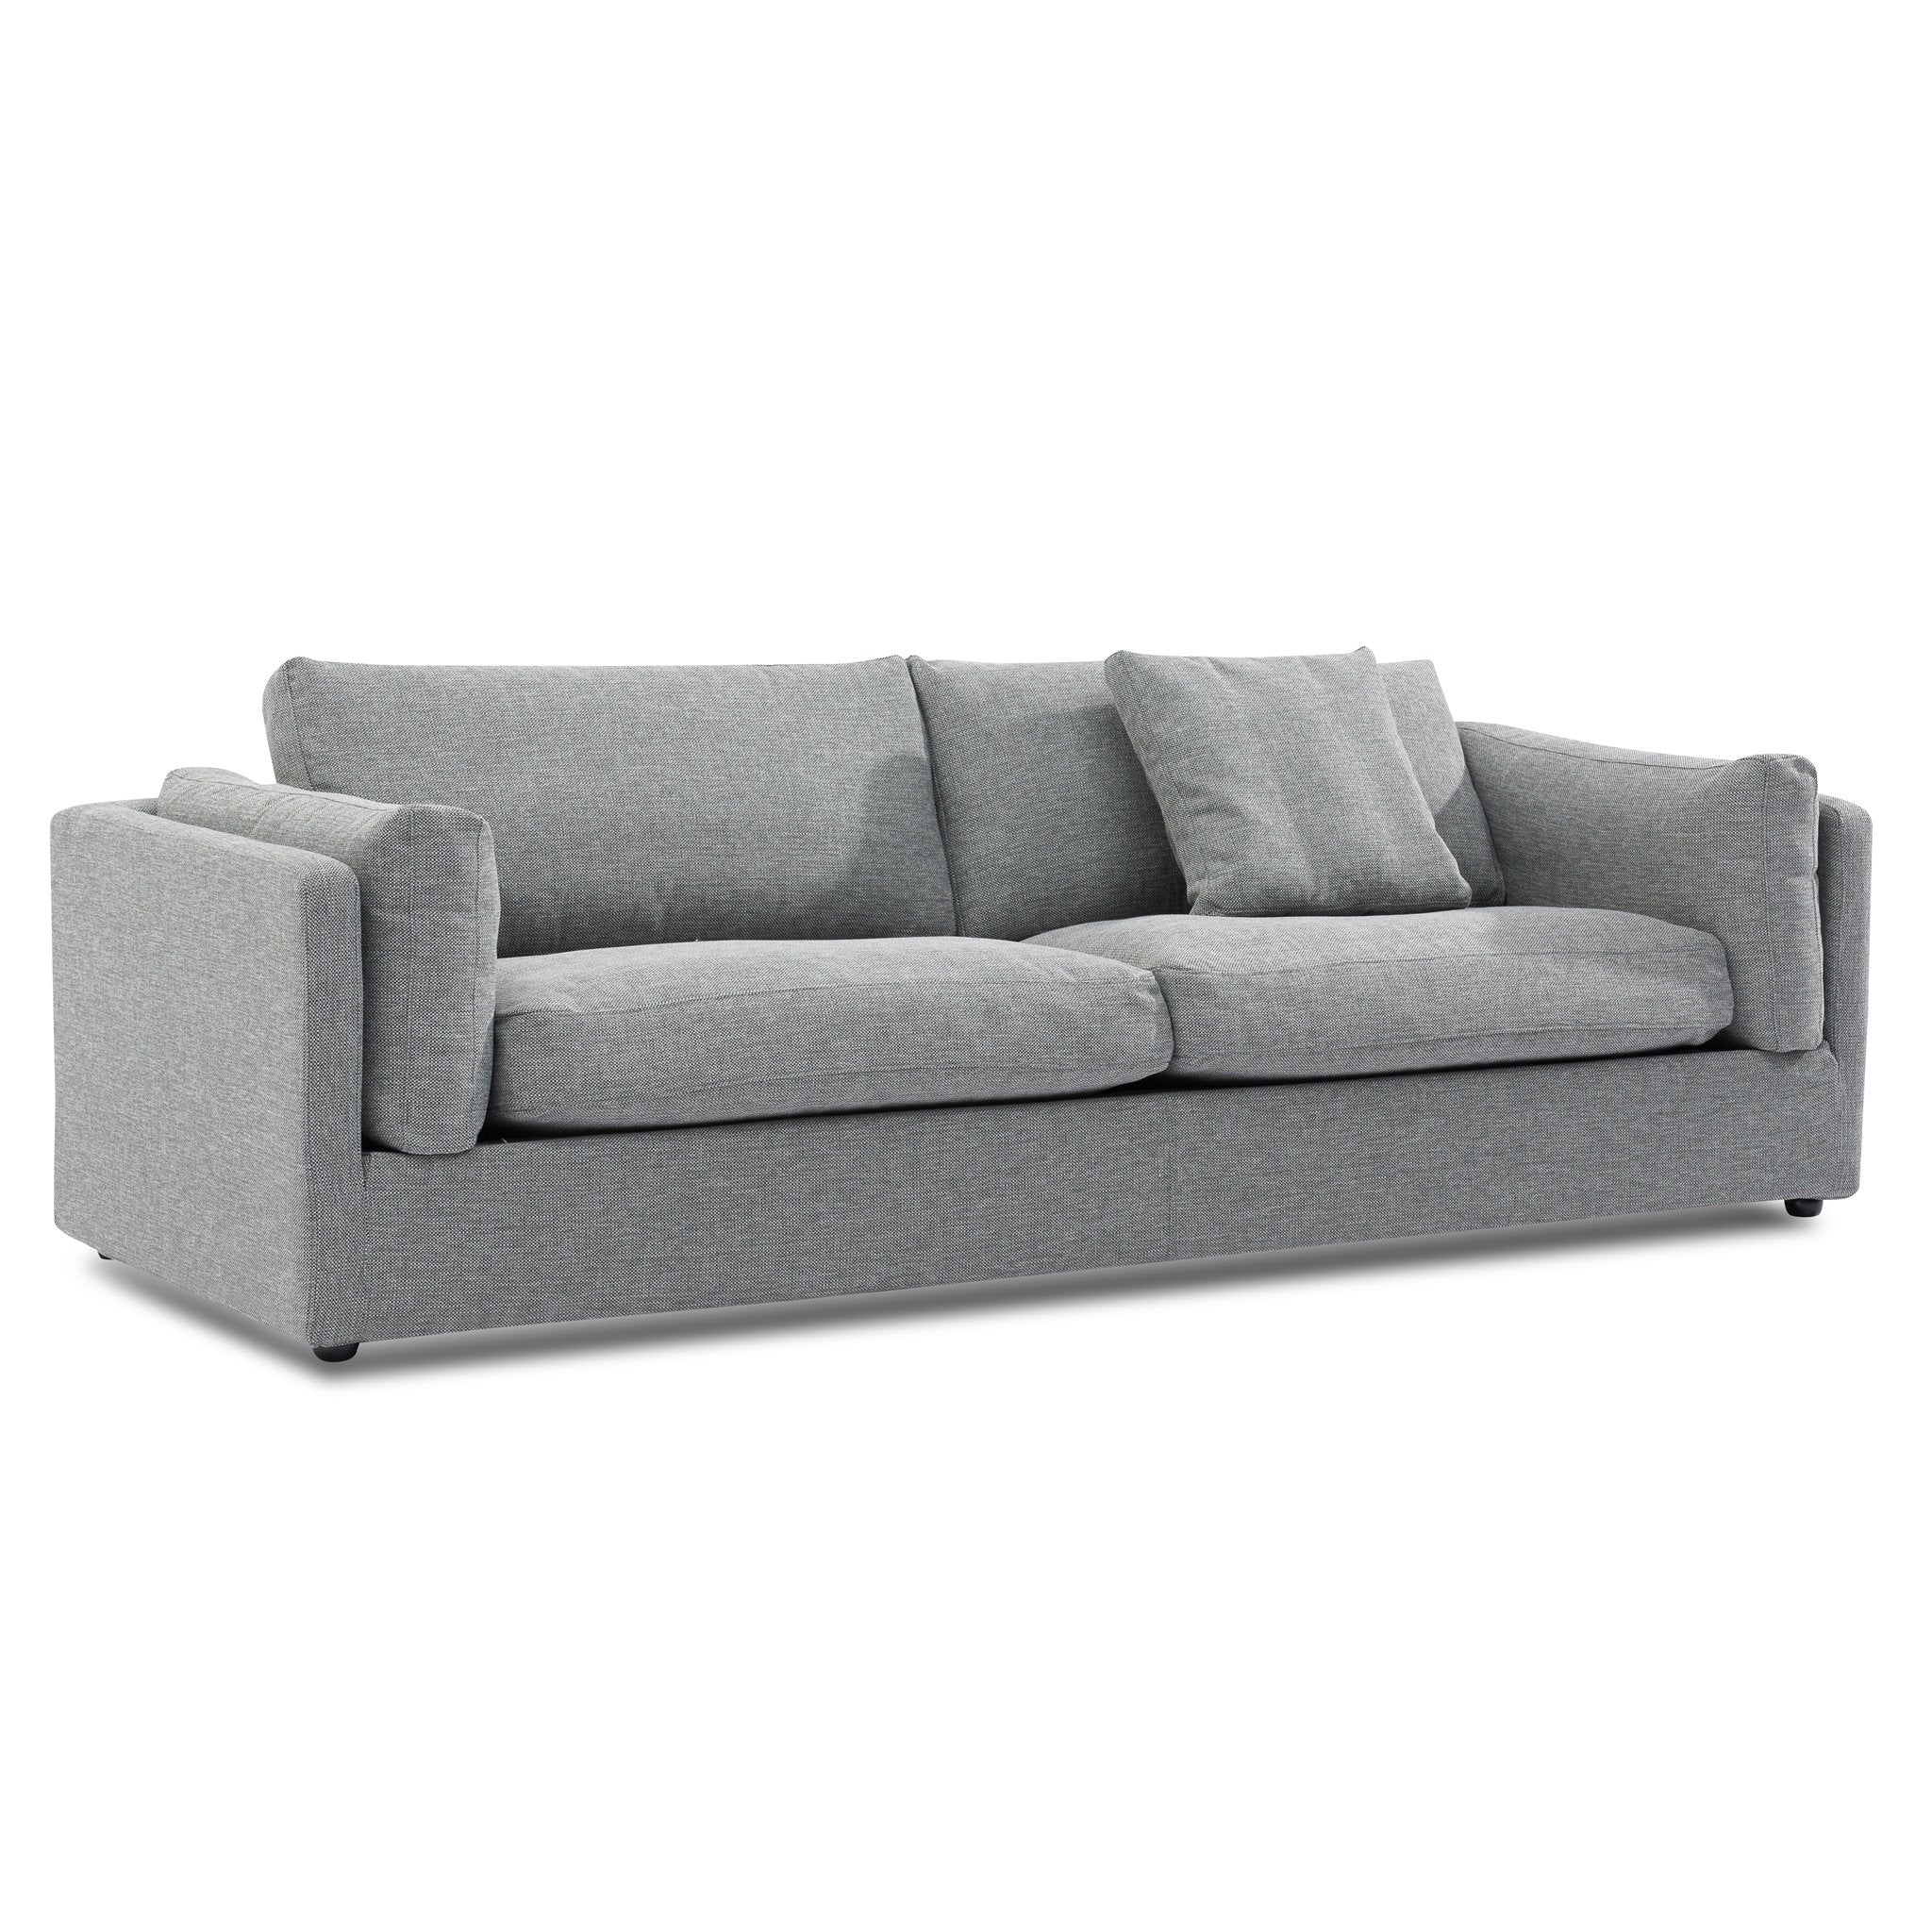 Adeline 3 Fabric Seater Sofa - Graphite Grey